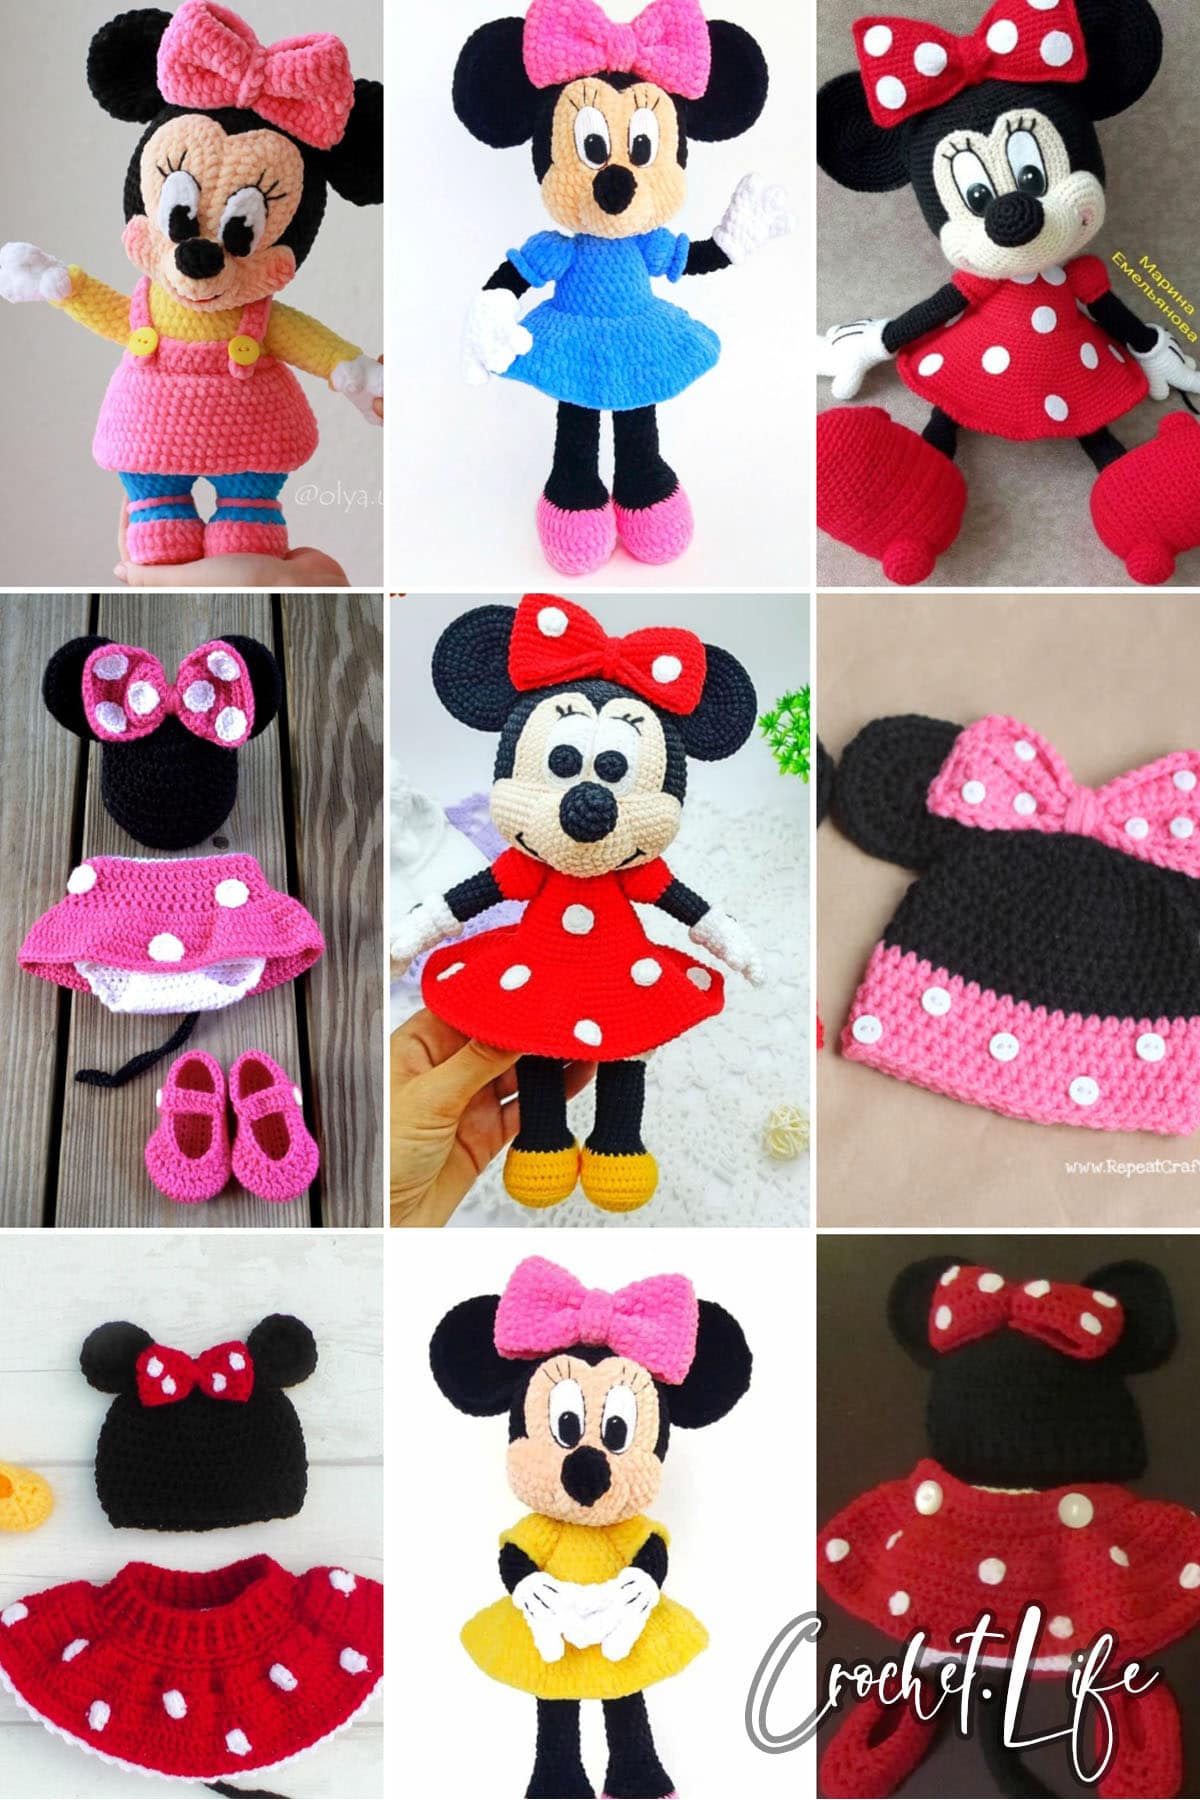 14 Pretty Minnie Mouse Crochet Patterns - Crochet Life